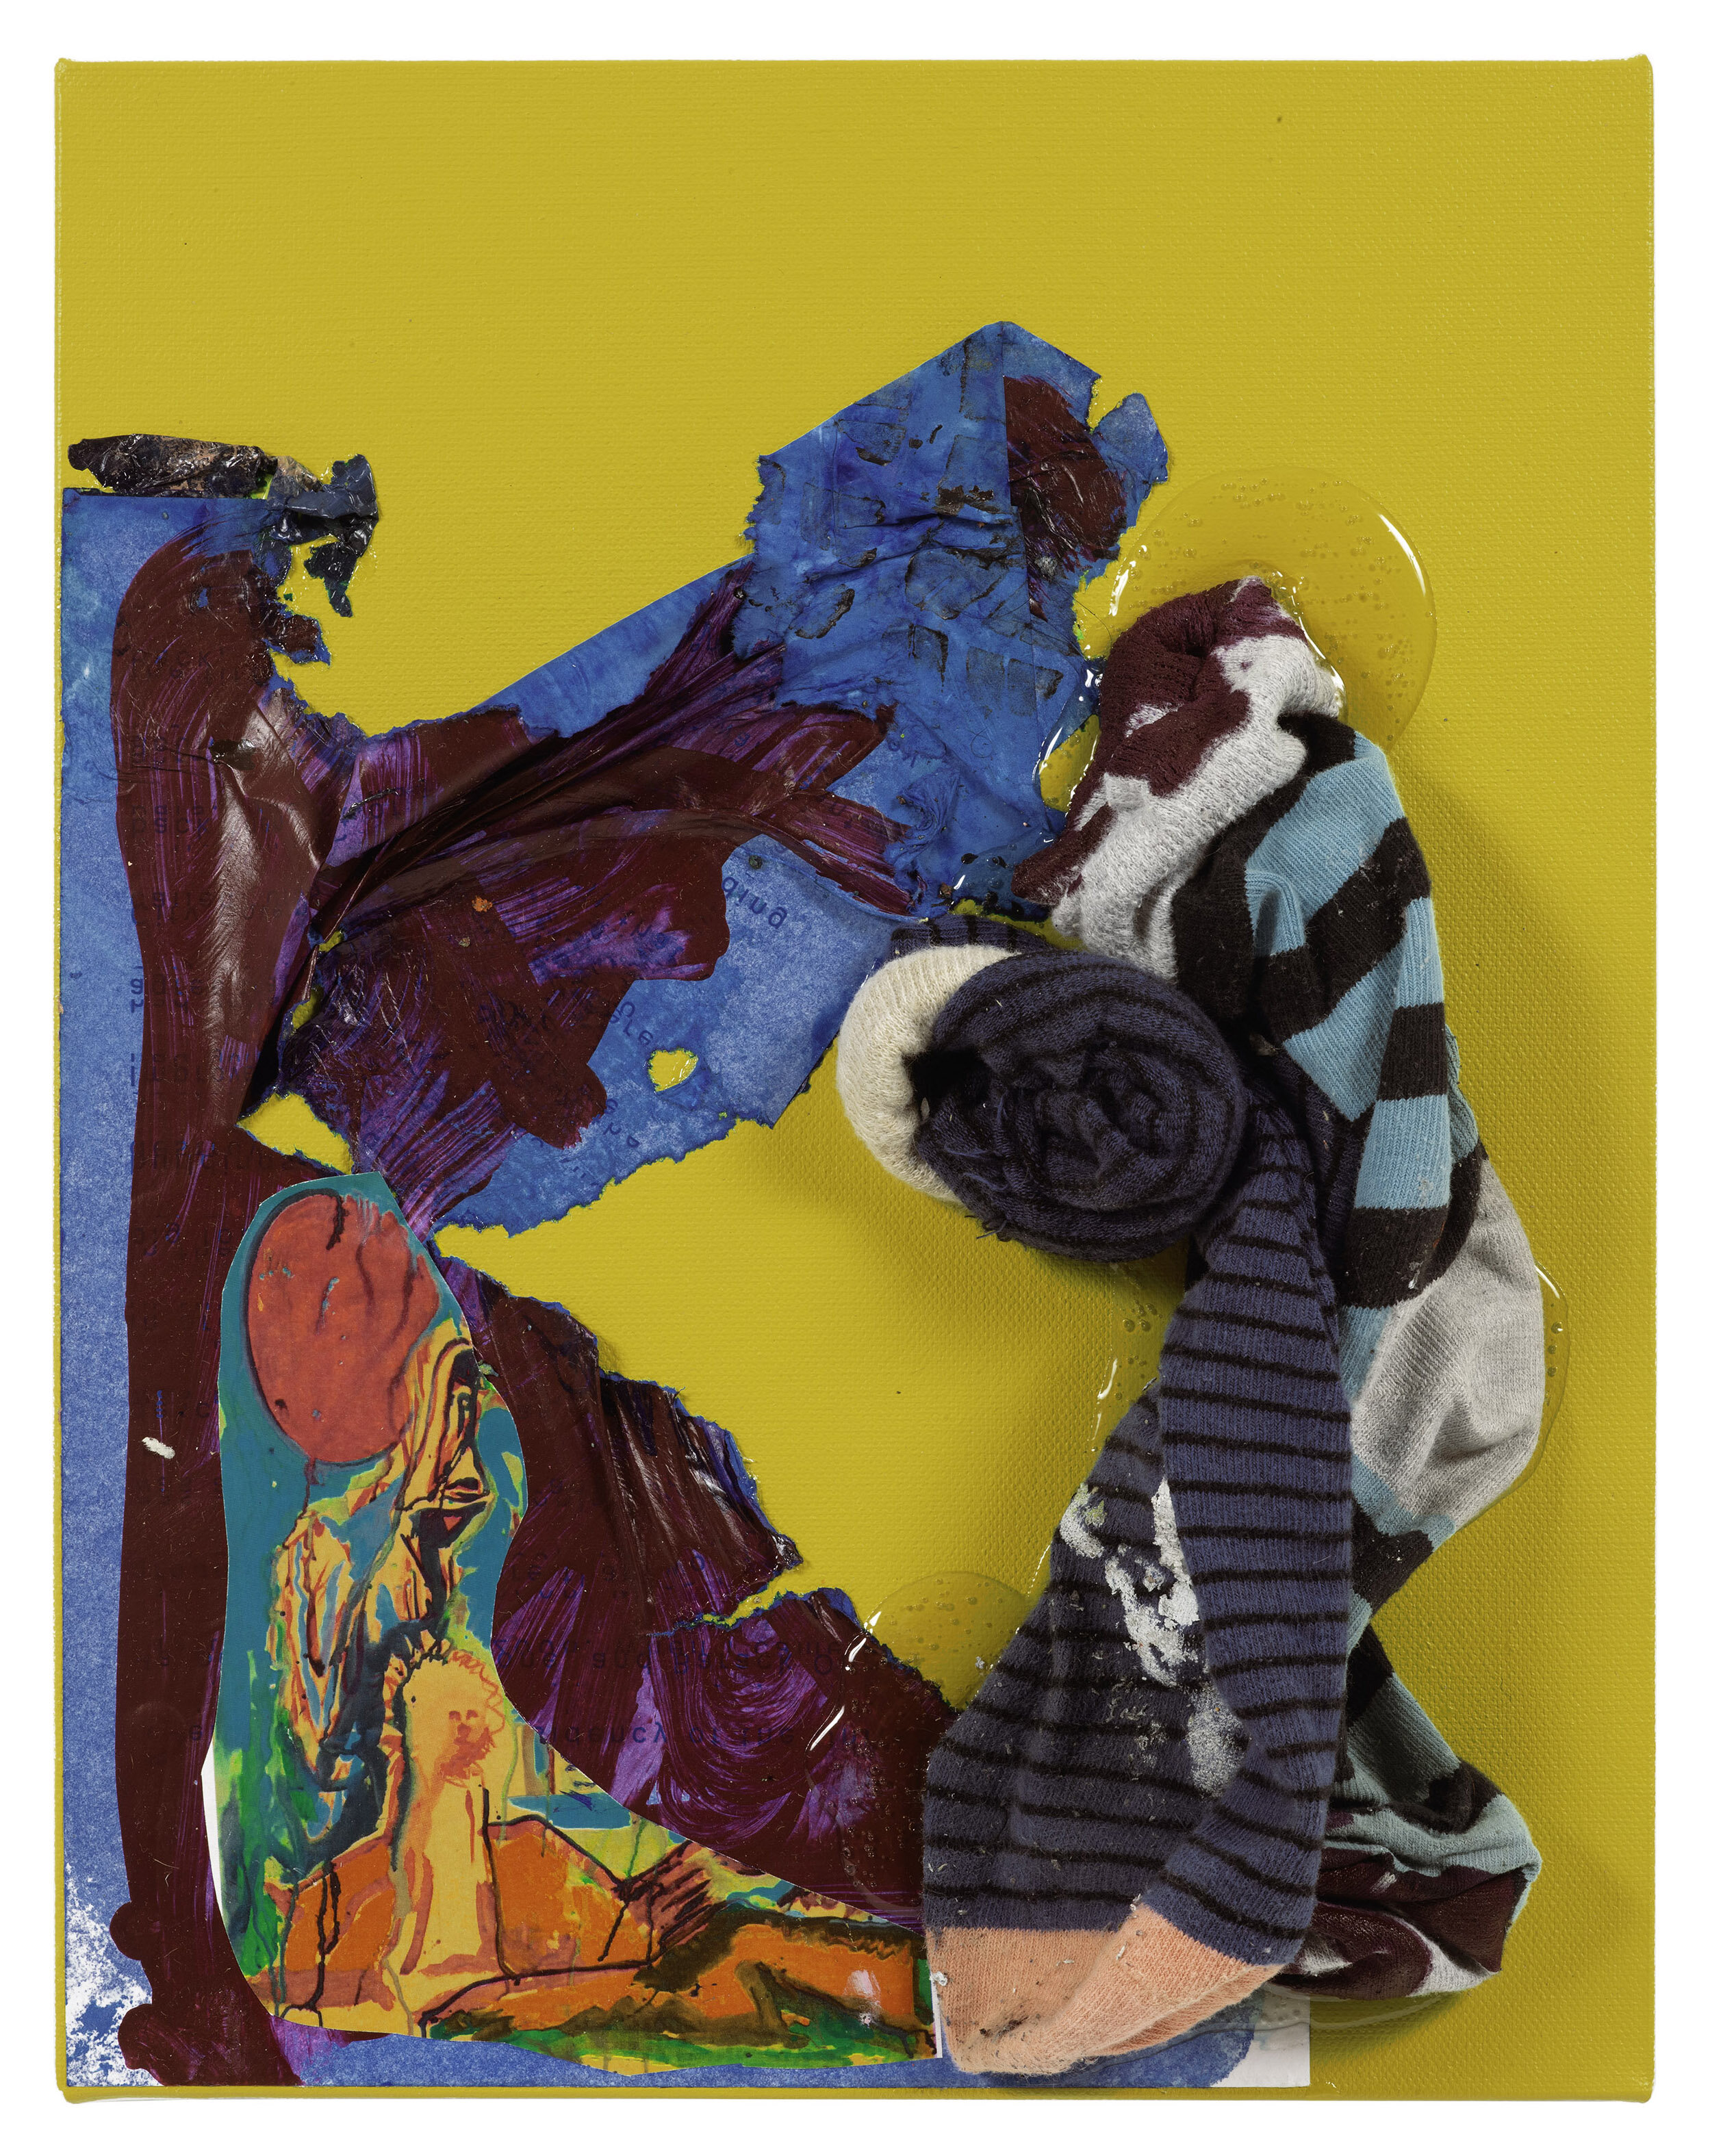  Drew Beattie  Cruel World   2020 acrylic, collage and socks on canvas 14 x 11 inches 